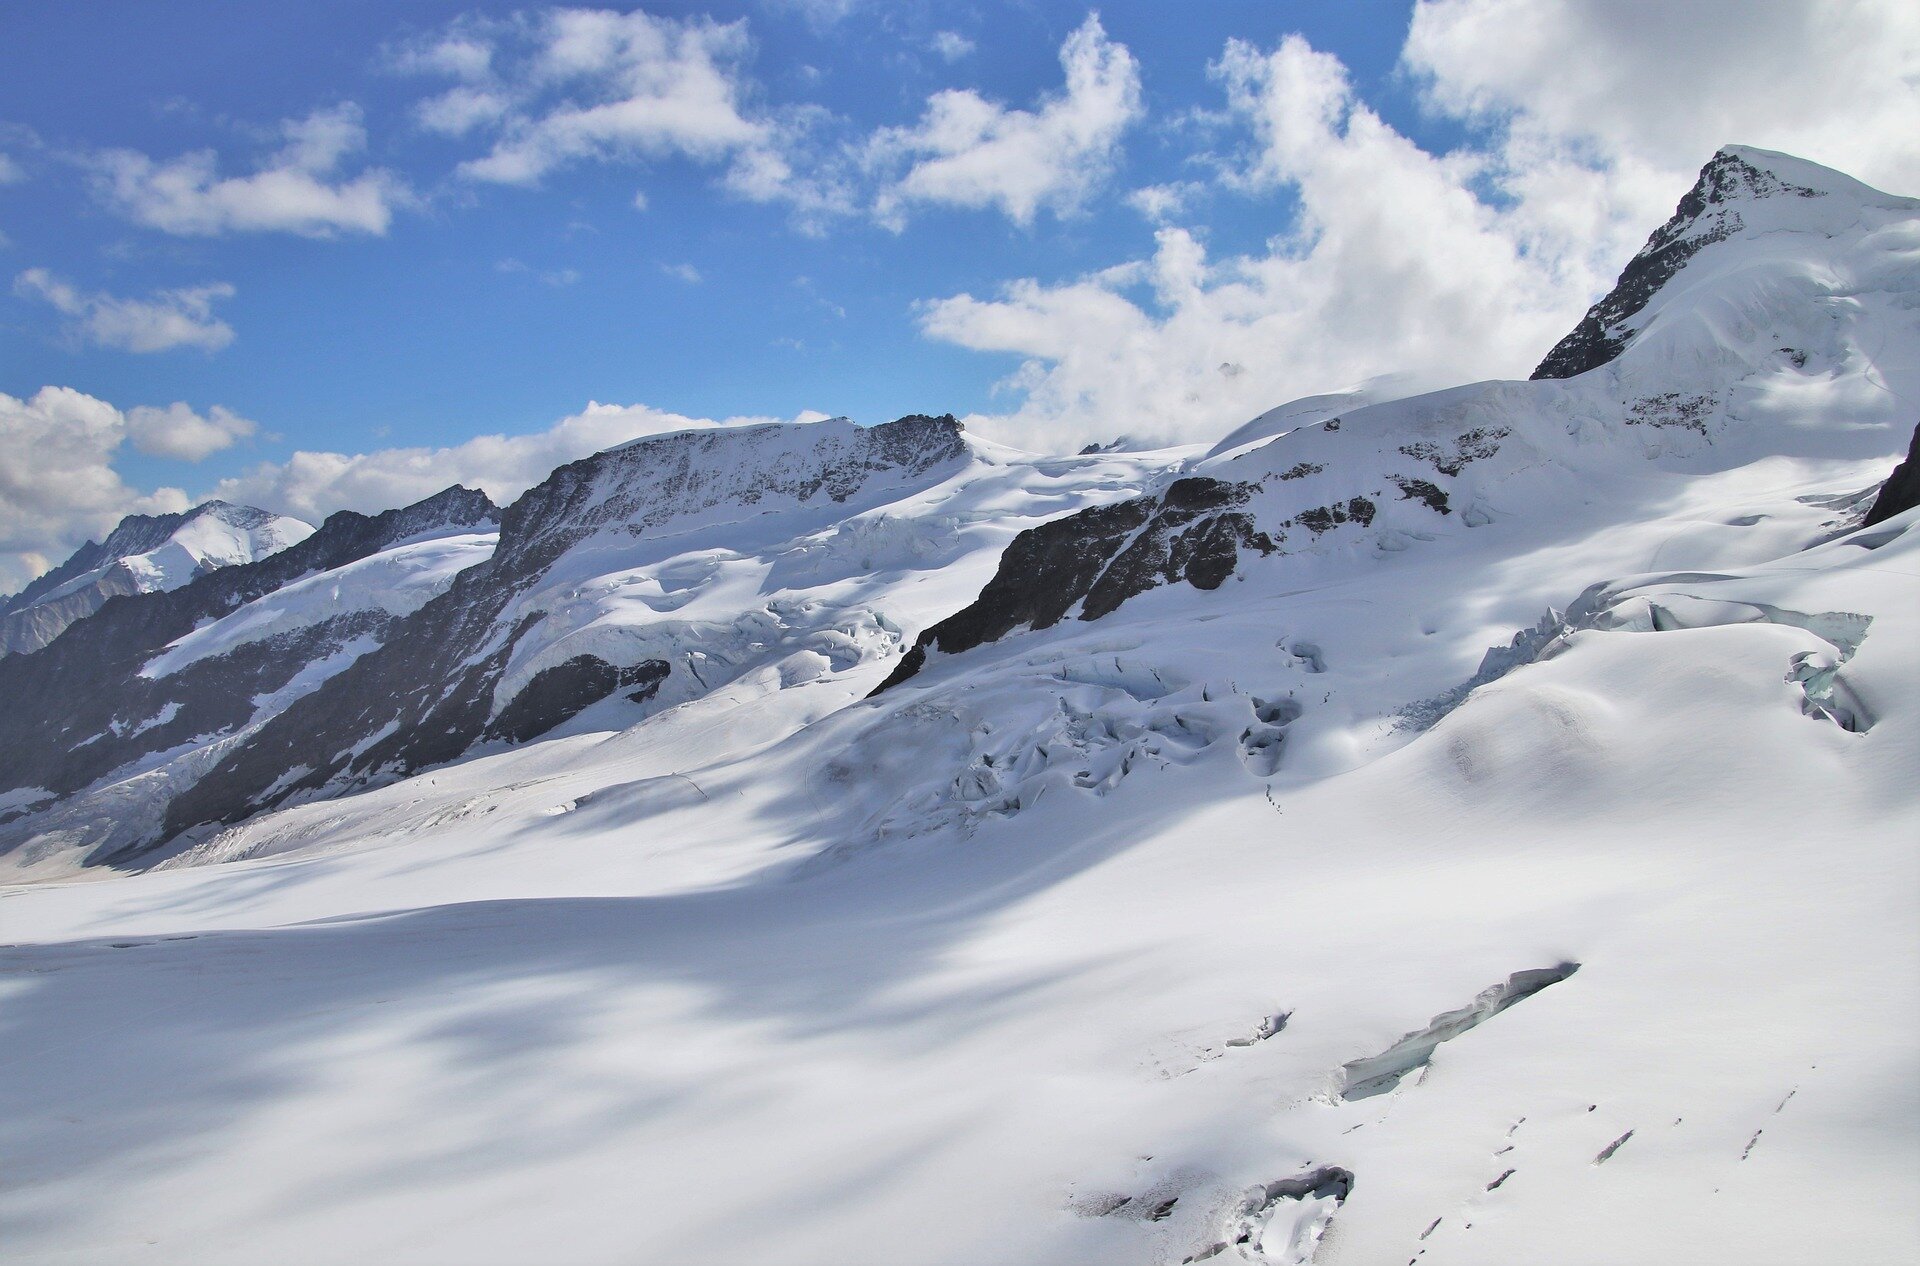 #Heatwave led to unprecedented melt of Swiss glaciers